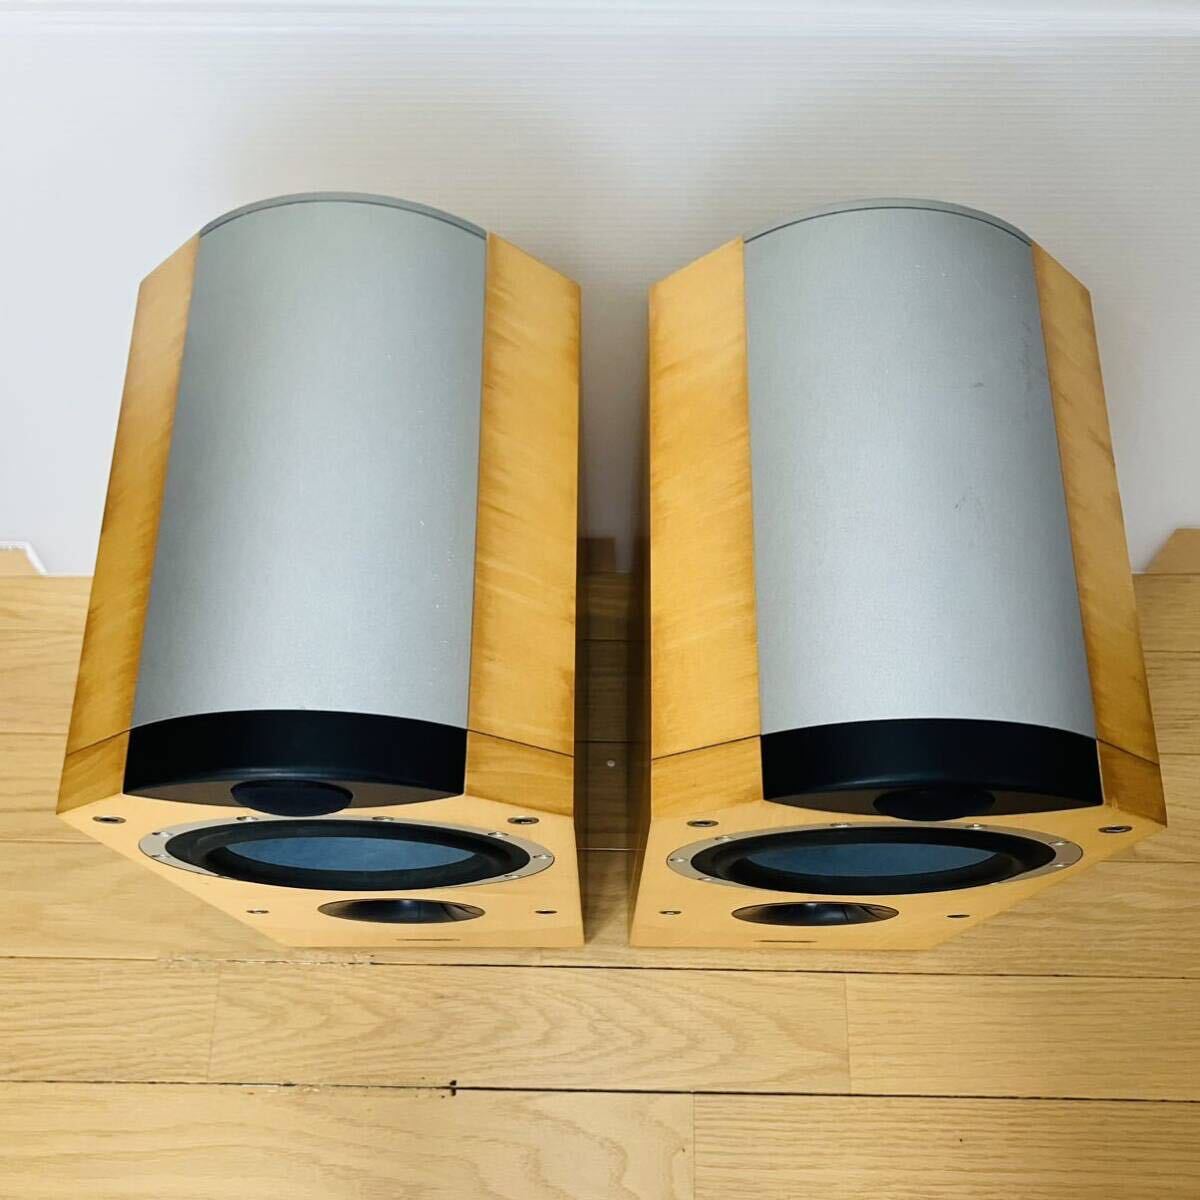  regular price 165,000 jpy tannoy eyris dc1 speaker same axis serial ream number 